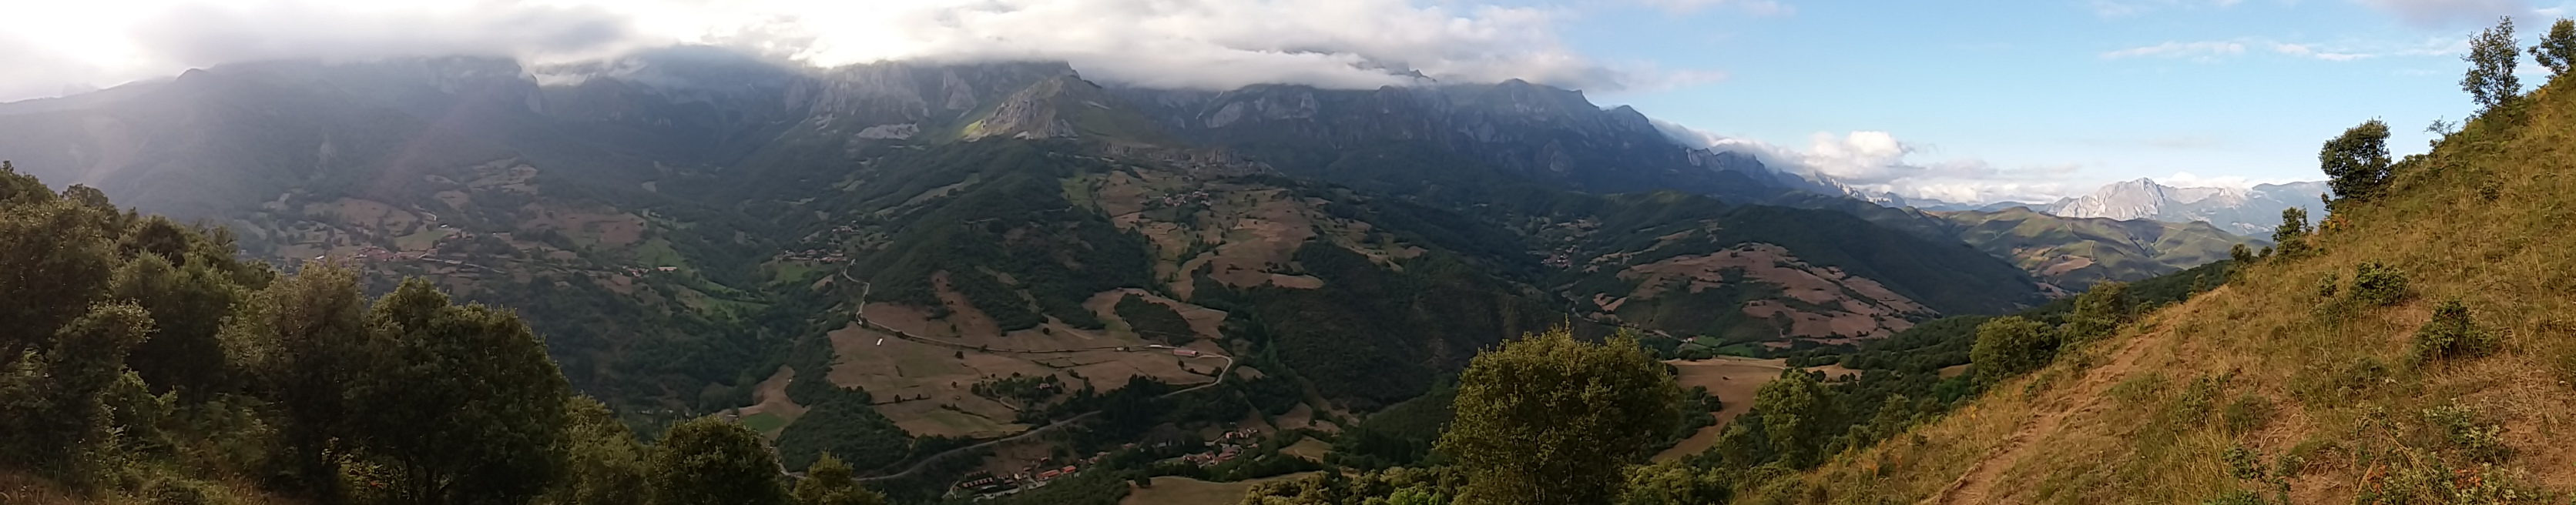 Panoramica del valle 